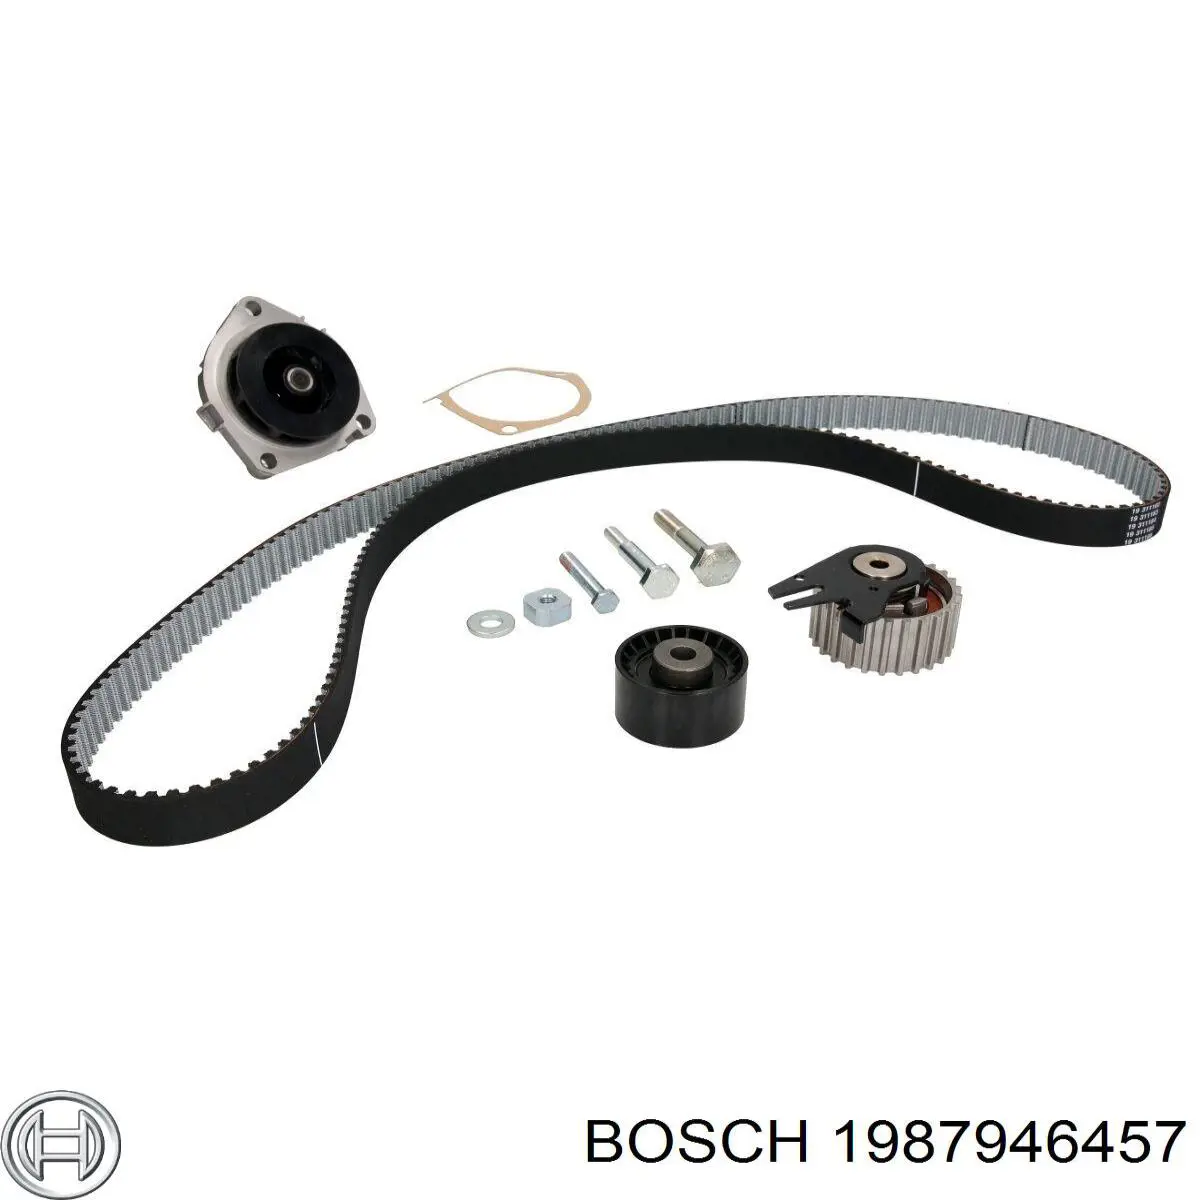 1987946457 Bosch kit de correa de distribución